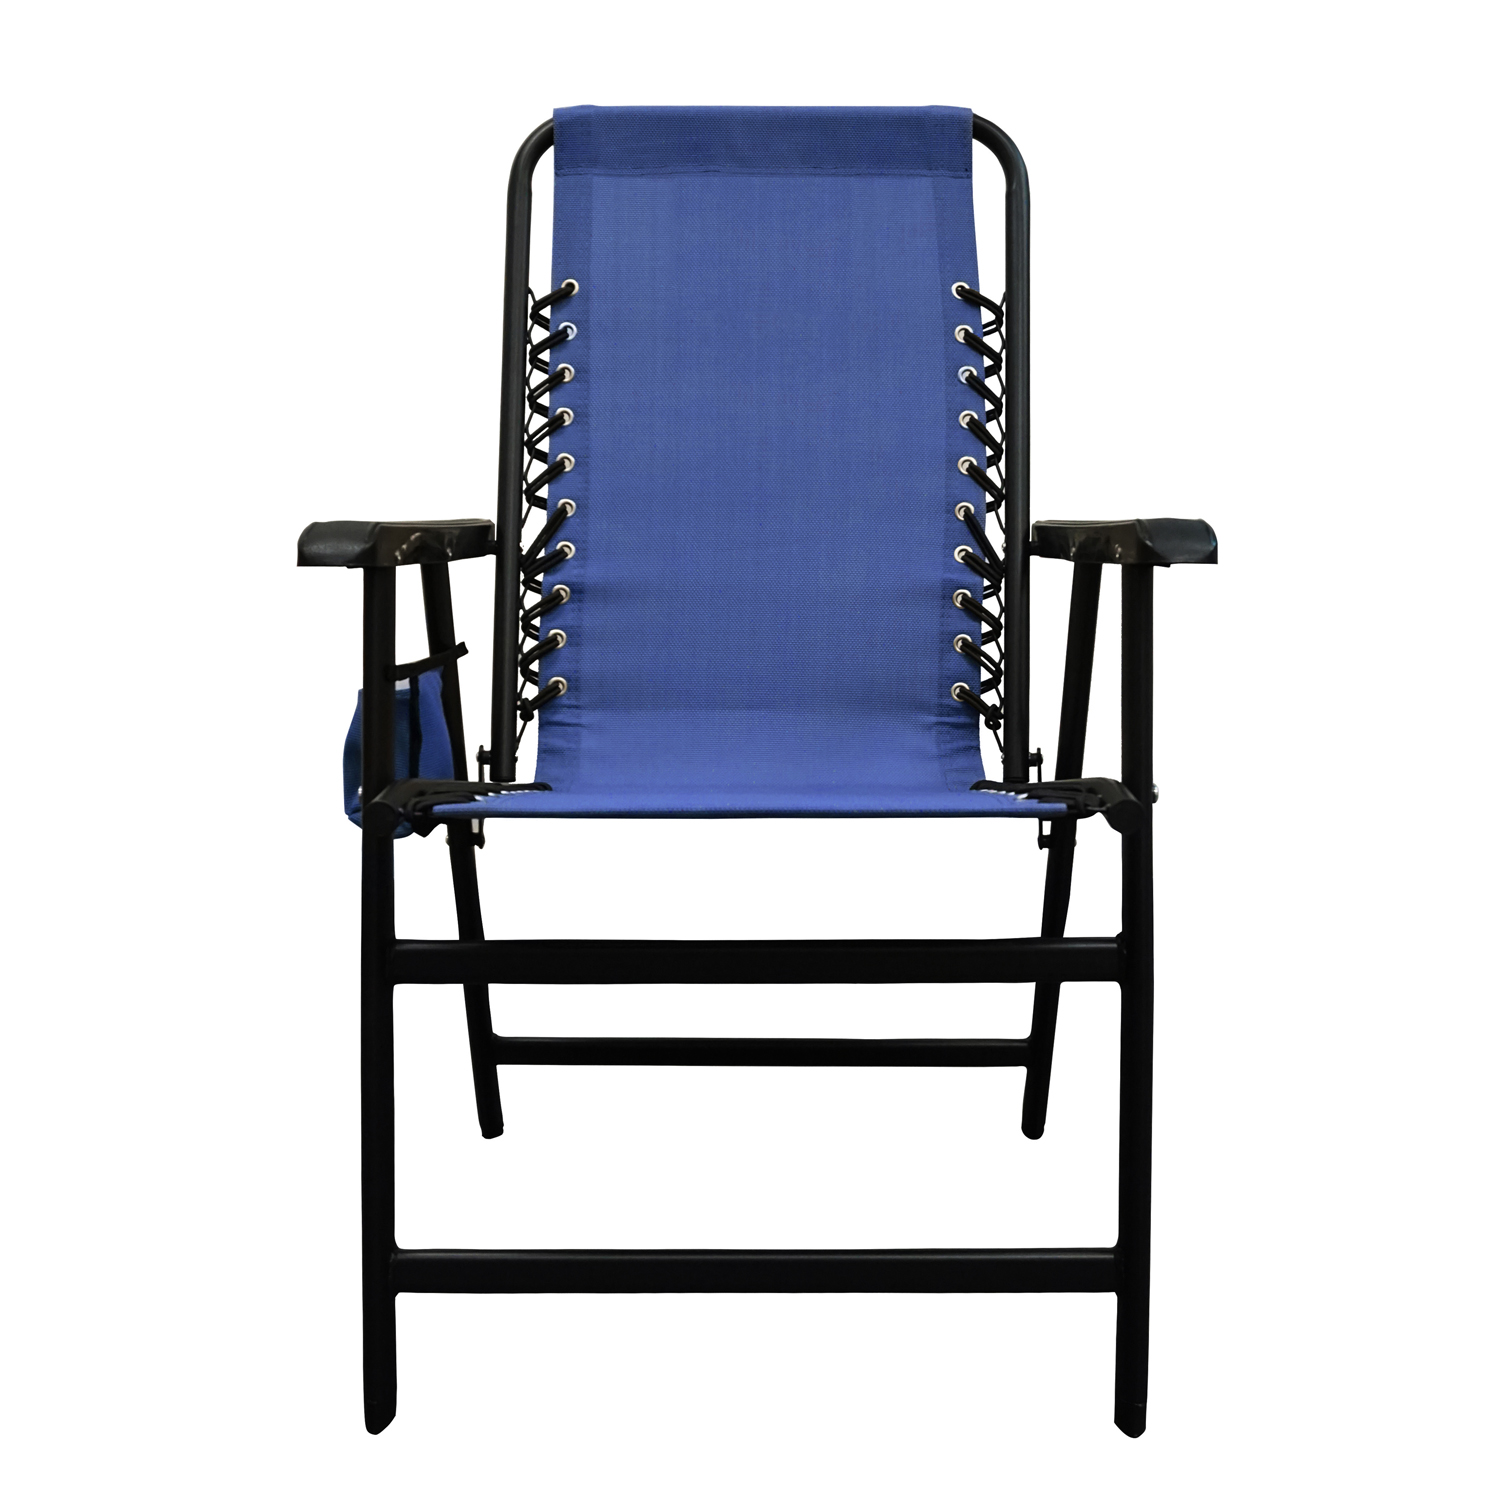 Caravan Sports XL Suspension Chair, Blue - image 2 of 5